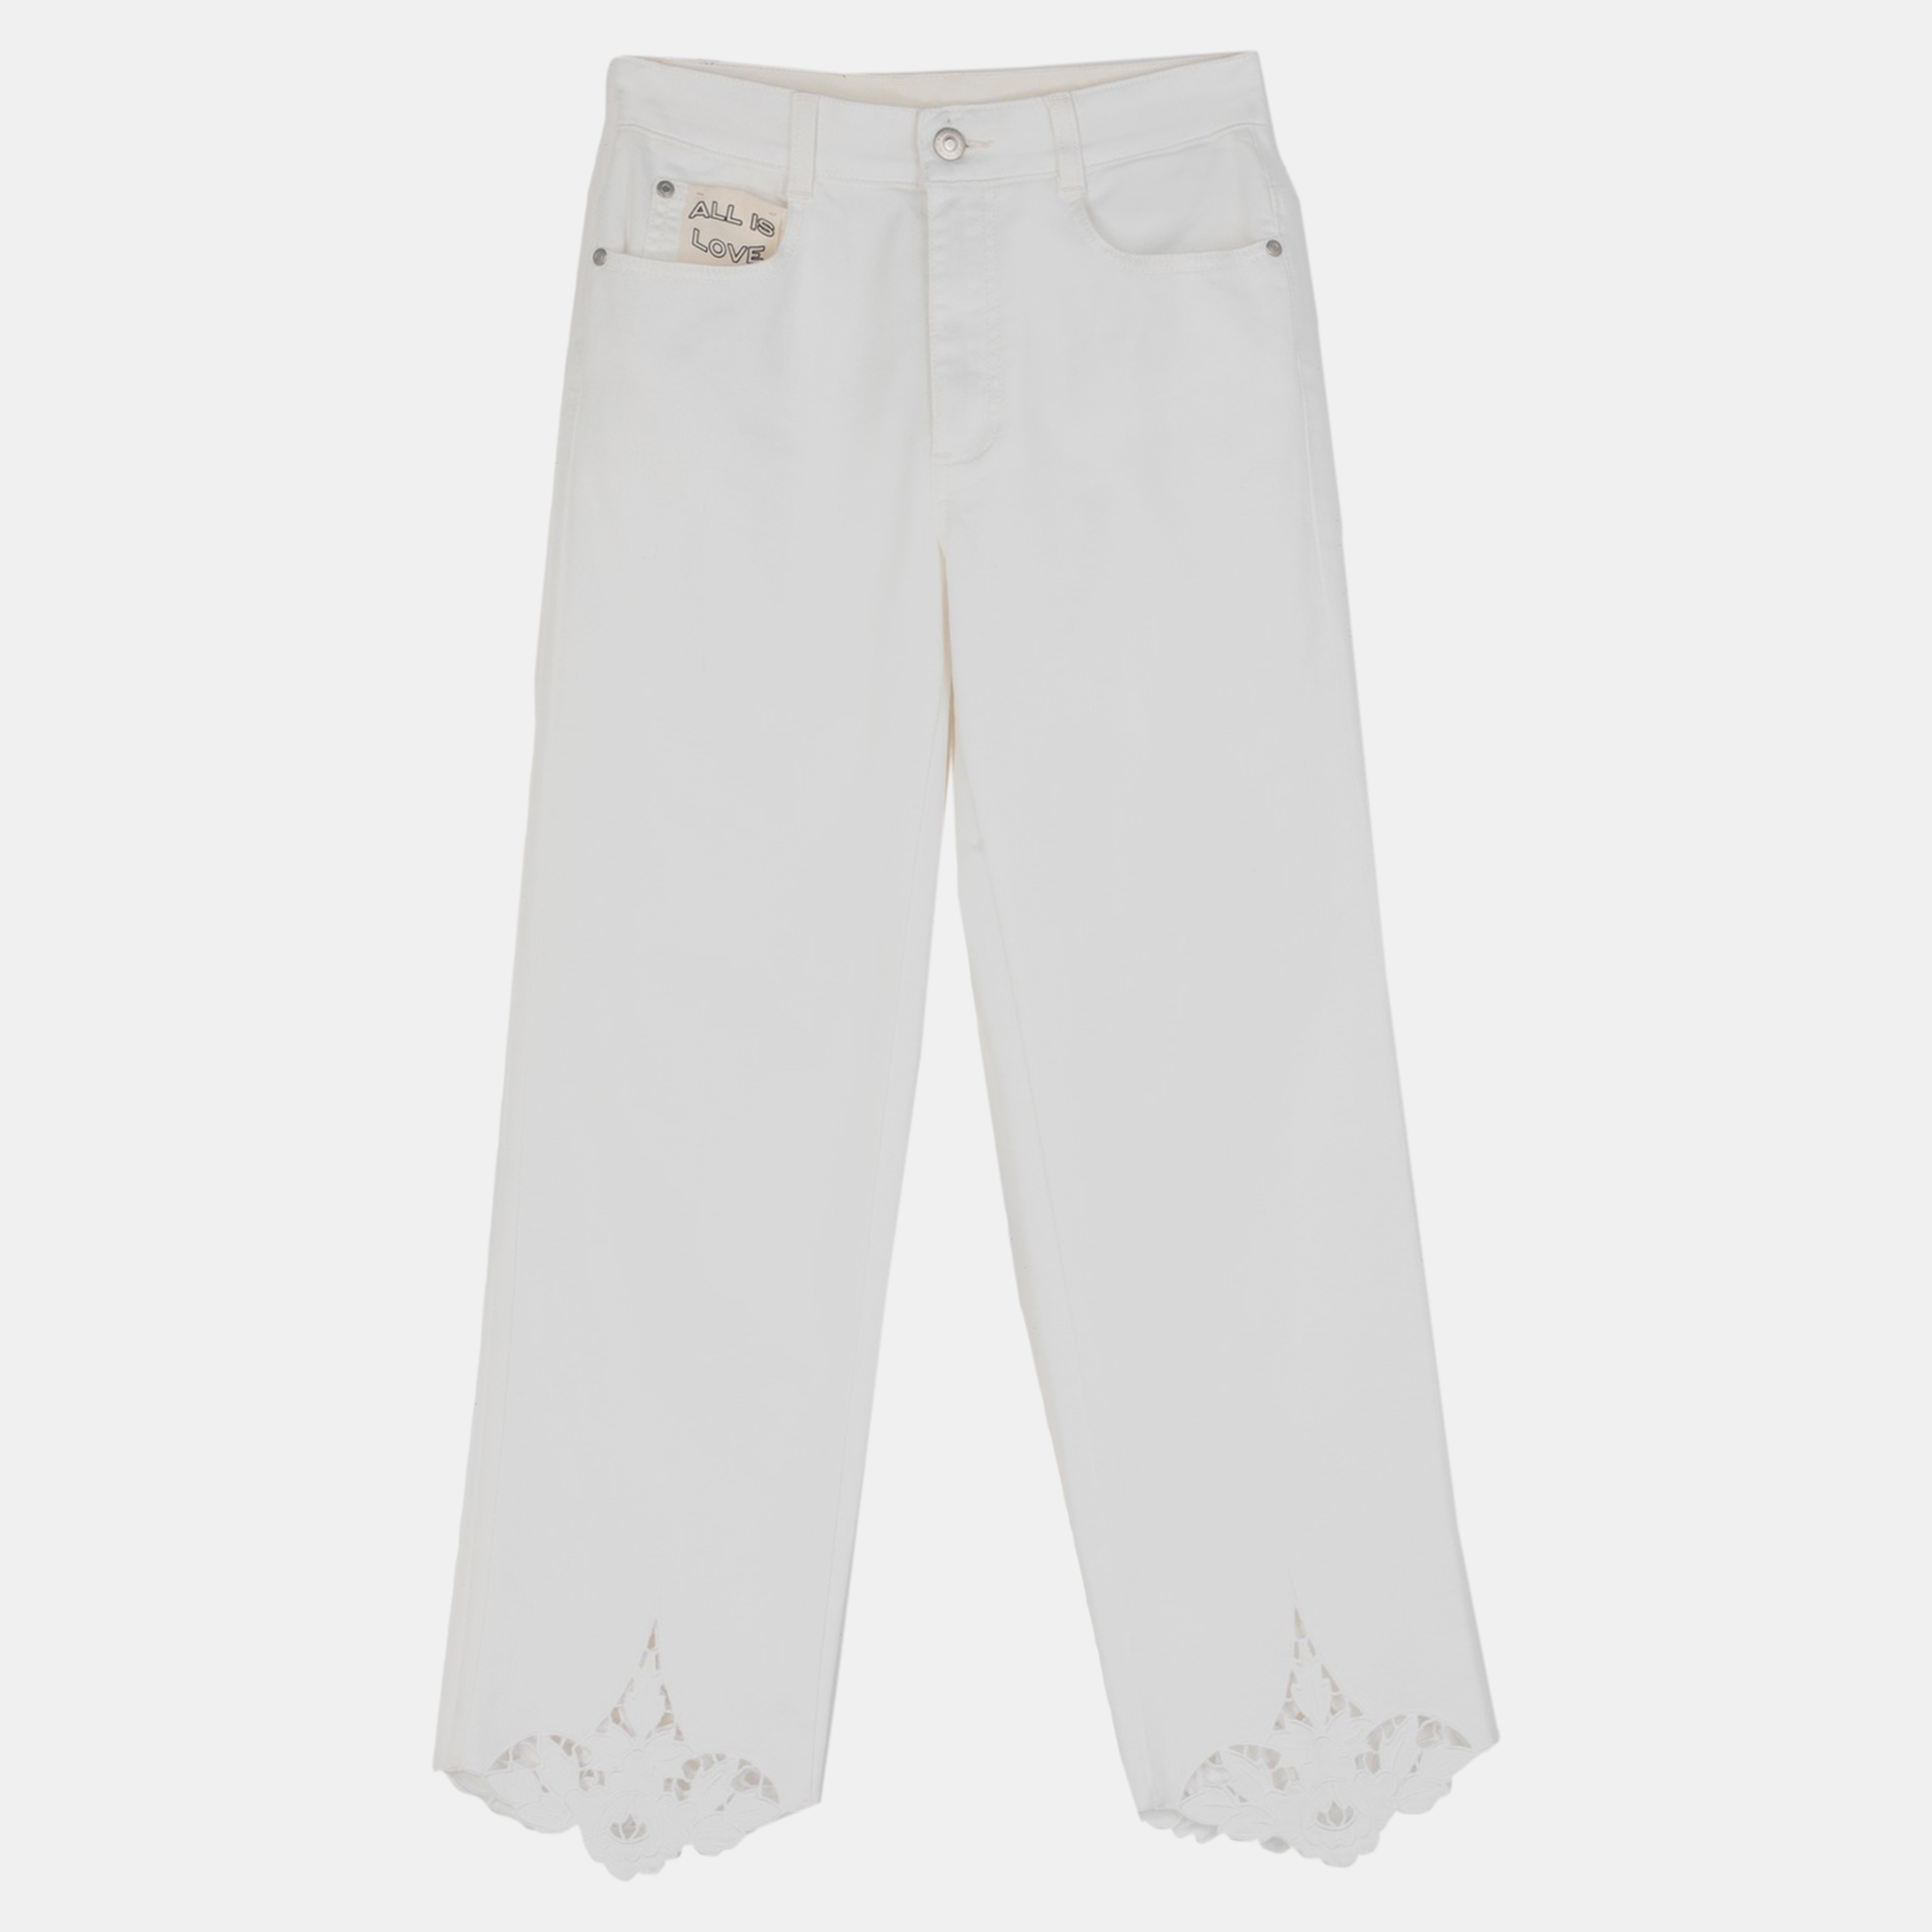 Stella mccartney cotton pants 26